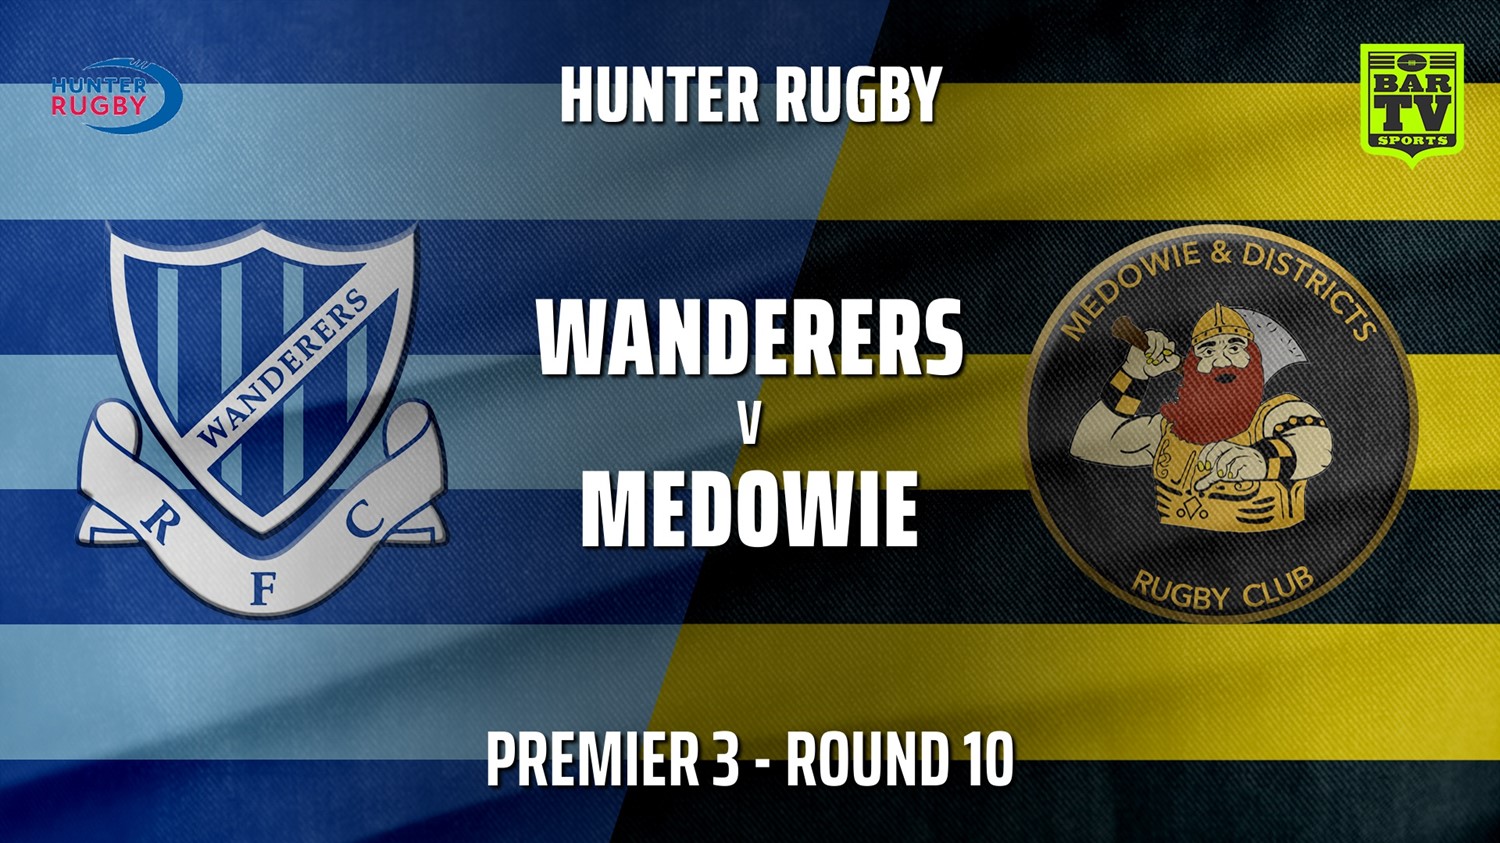 210626-Hunter Rugby Round 10 - Premier 3 - Wanderers v Medowie Marauders Slate Image